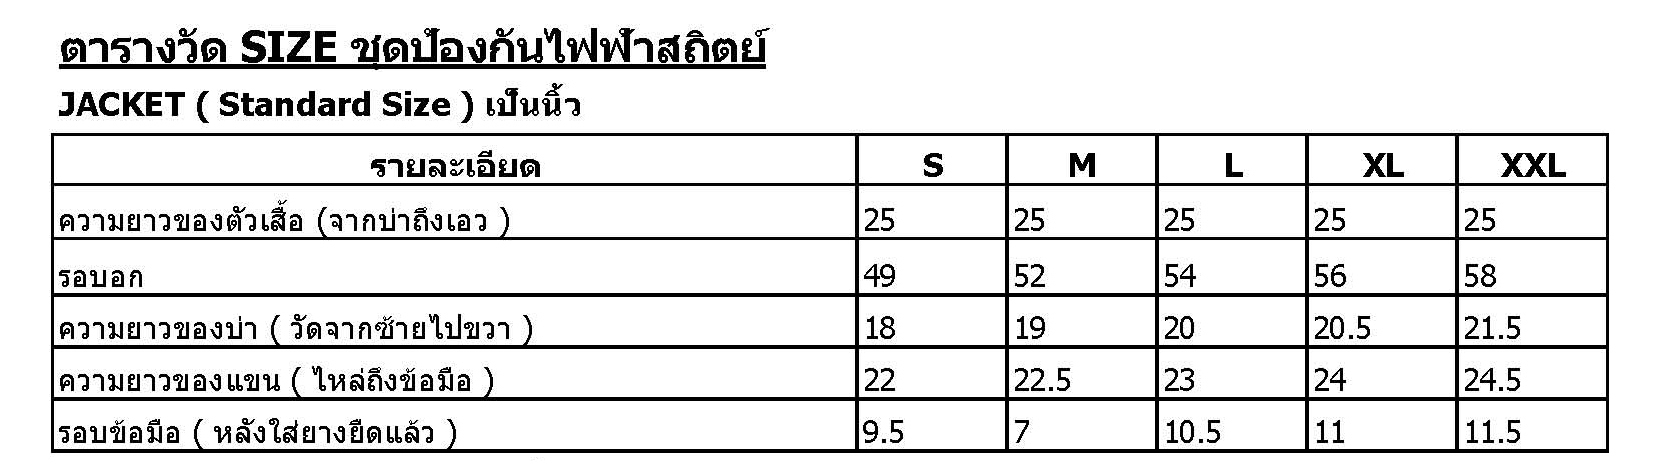 http://thailandsafety.com/wp-content/uploads/2016/09/%E0%B8%95%E0%B8%B2%E0%B8%A3%E0%B8%B2%E0%B8%87%E0%B8%A7%E0%B8%B1%E0%B8%94_Size_JK1.jpg